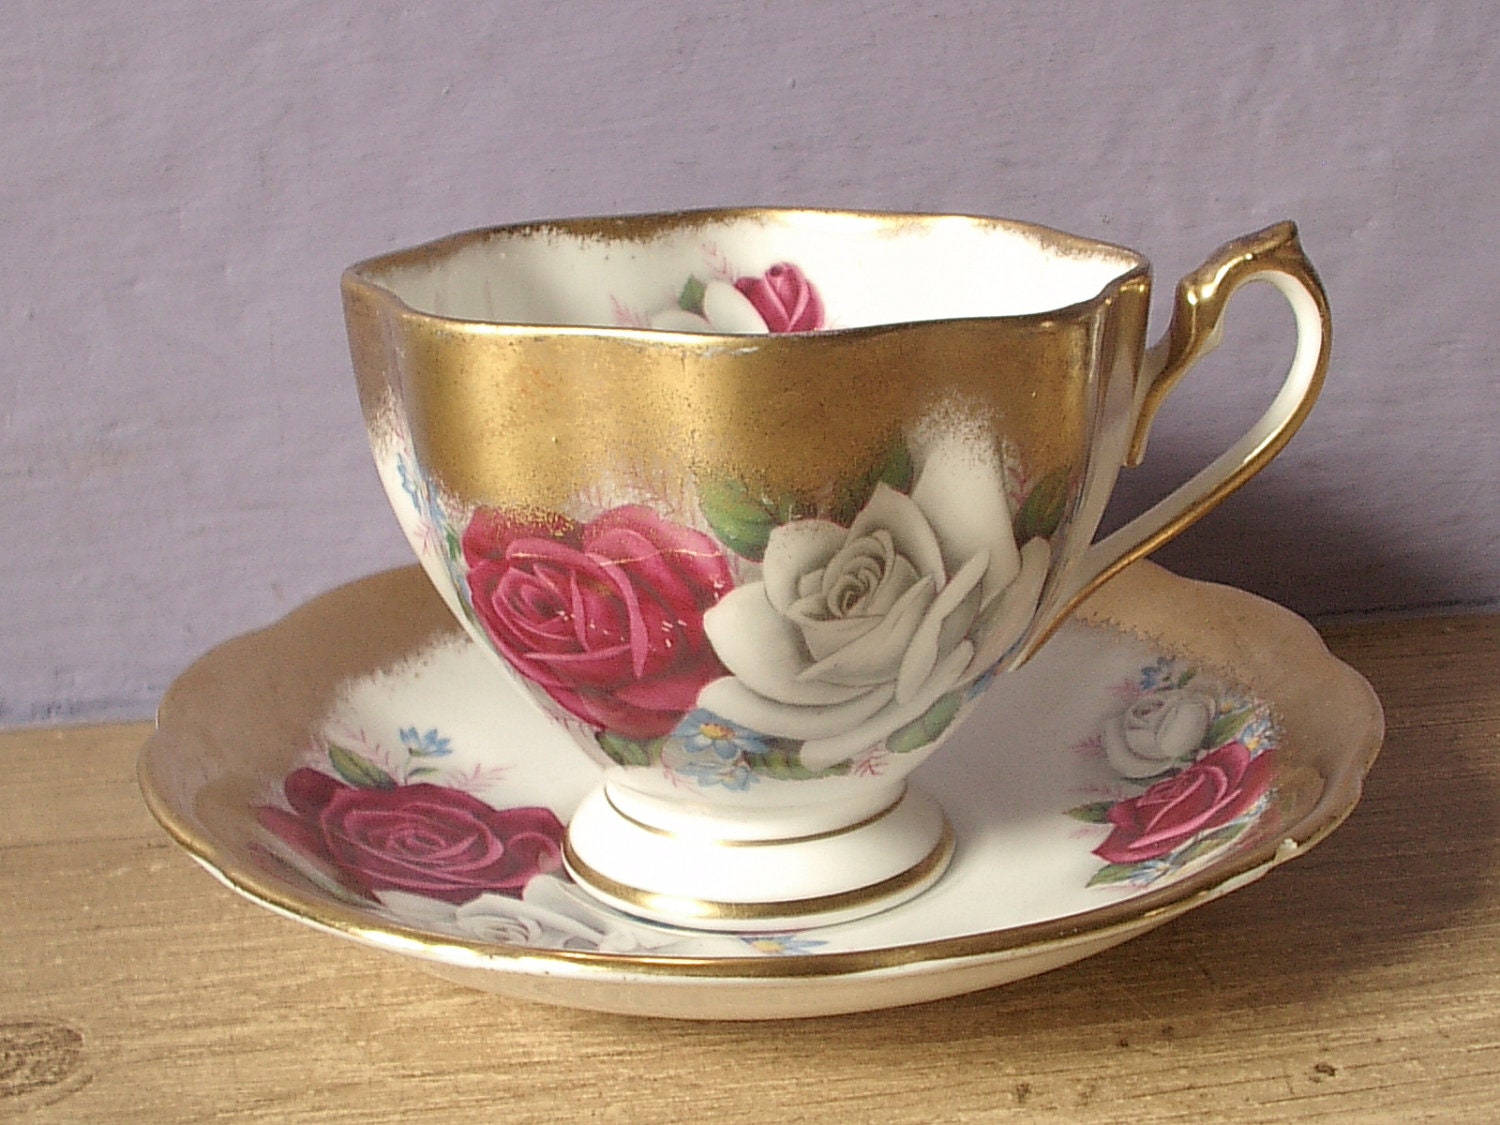 white cup vintage rose and saucer red cup by ShoponSherman  vintage tea set set